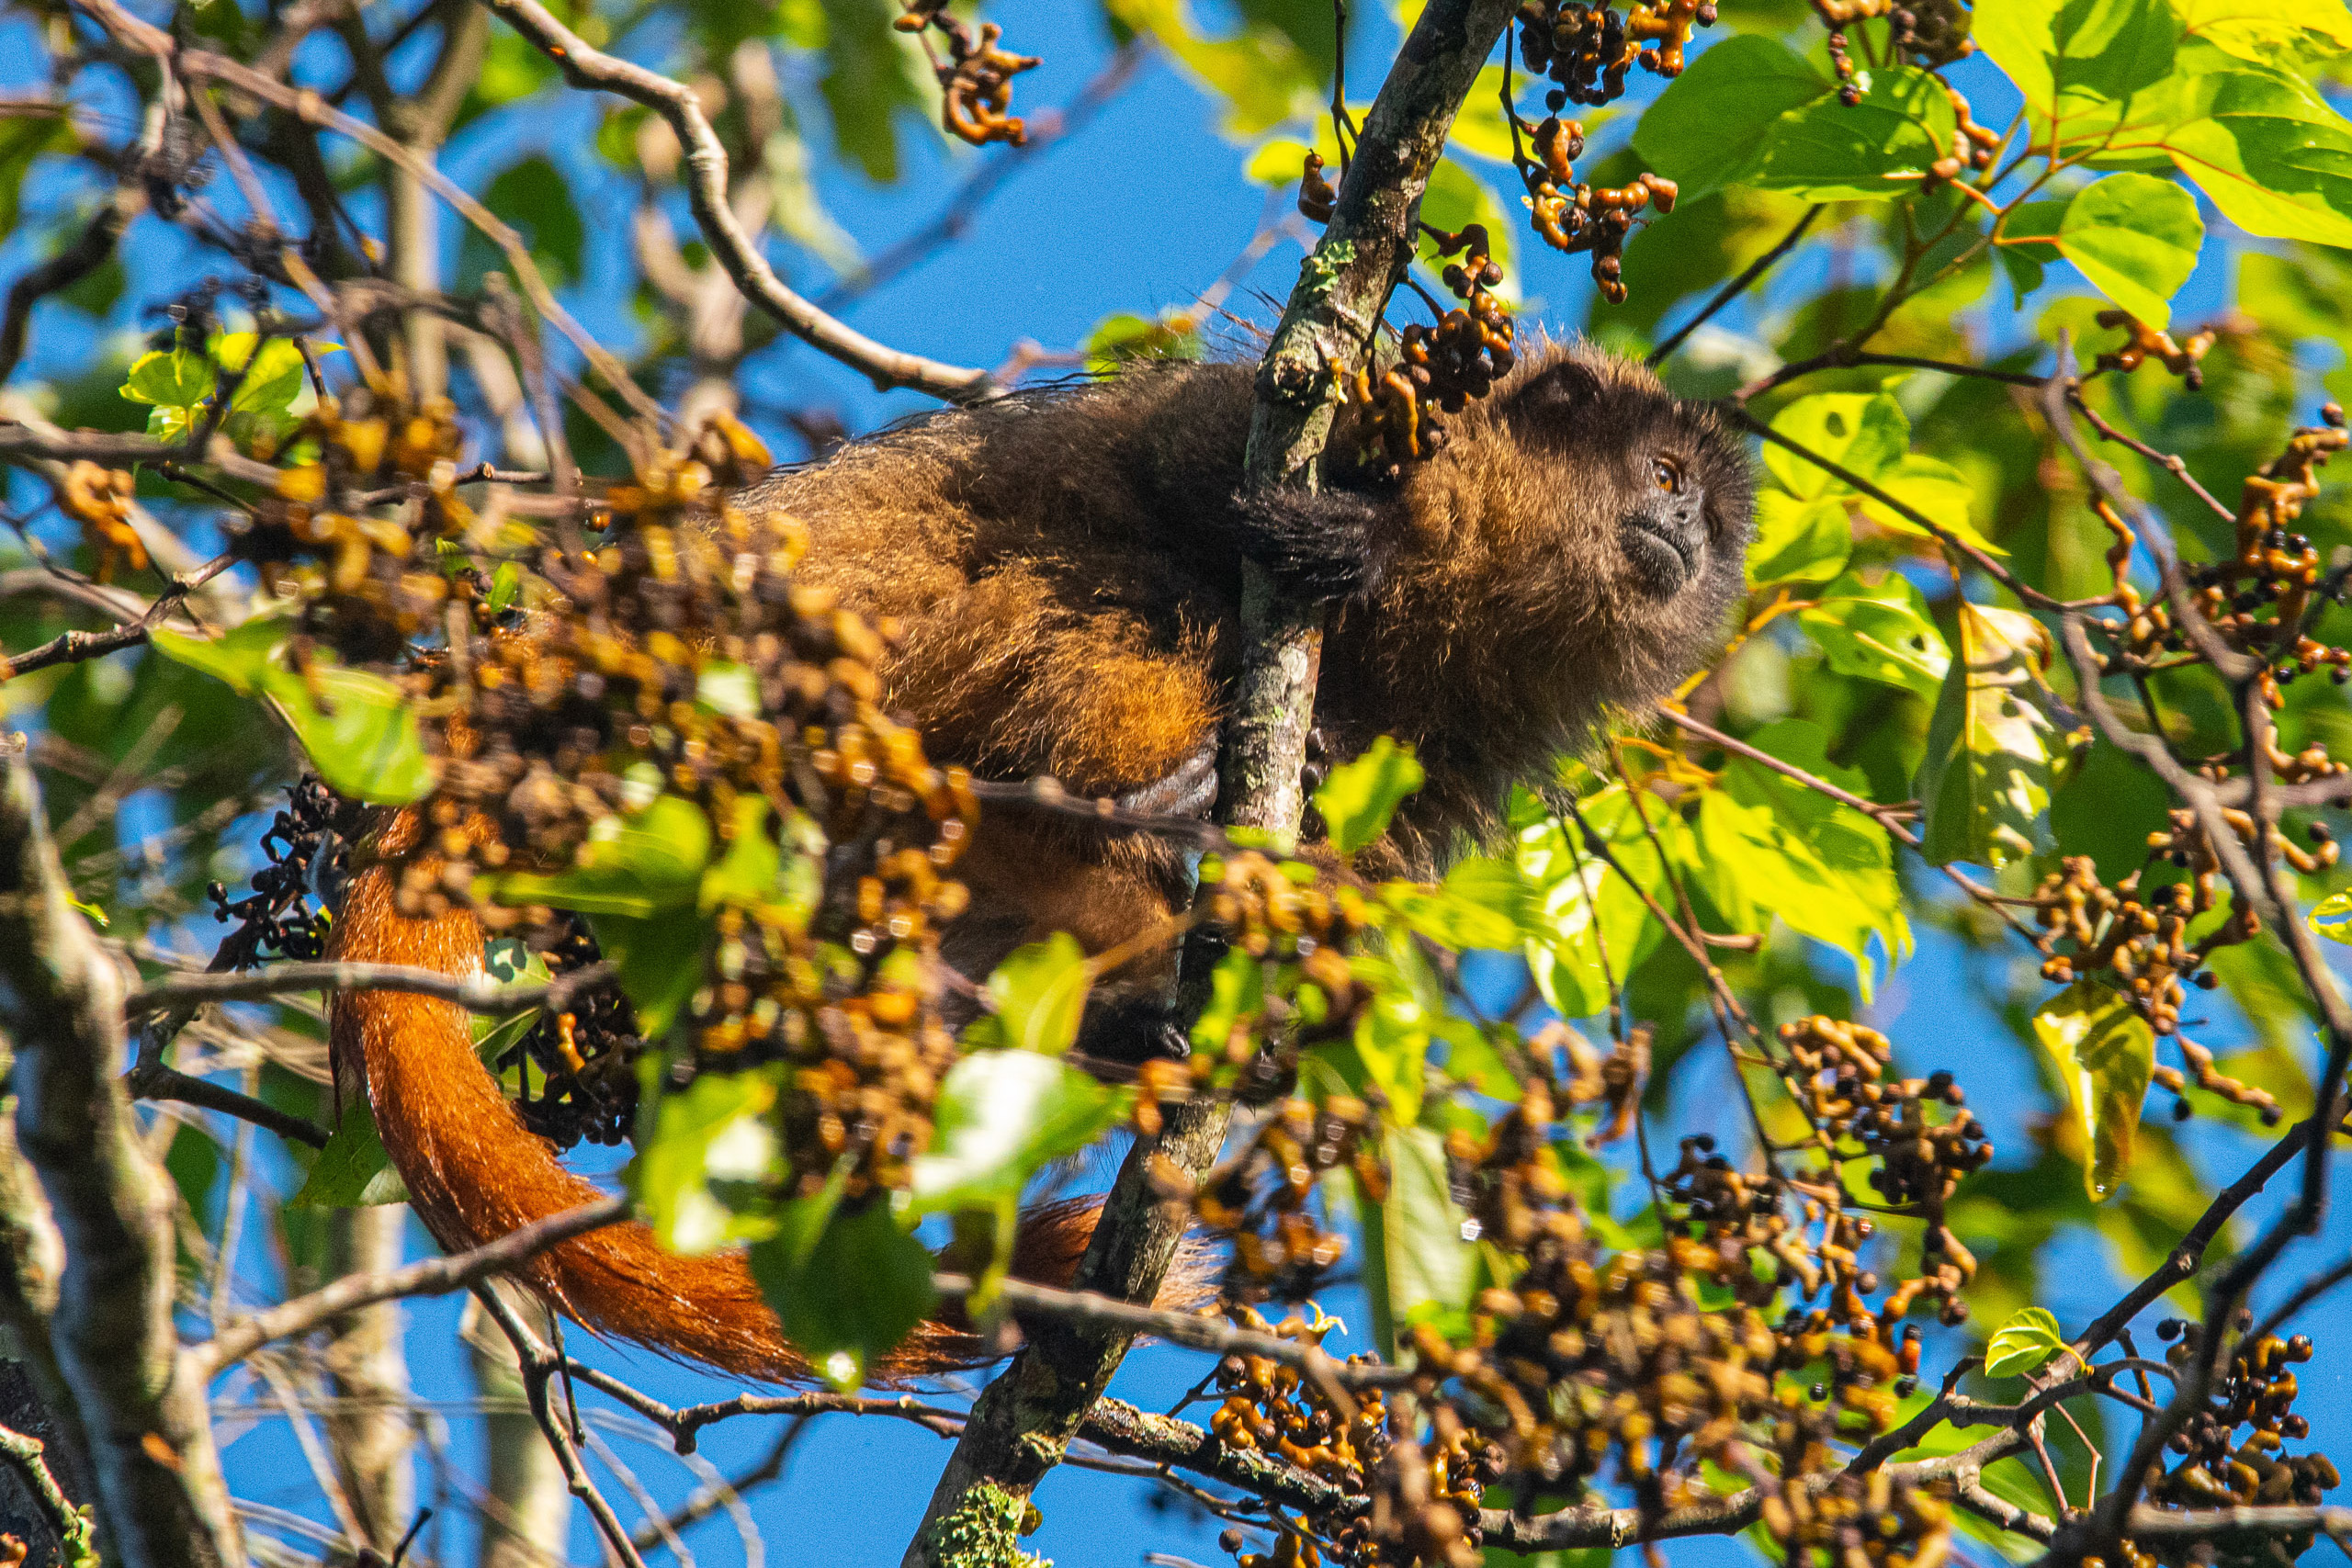 An Atlantic titi monkey feeds on fruits 